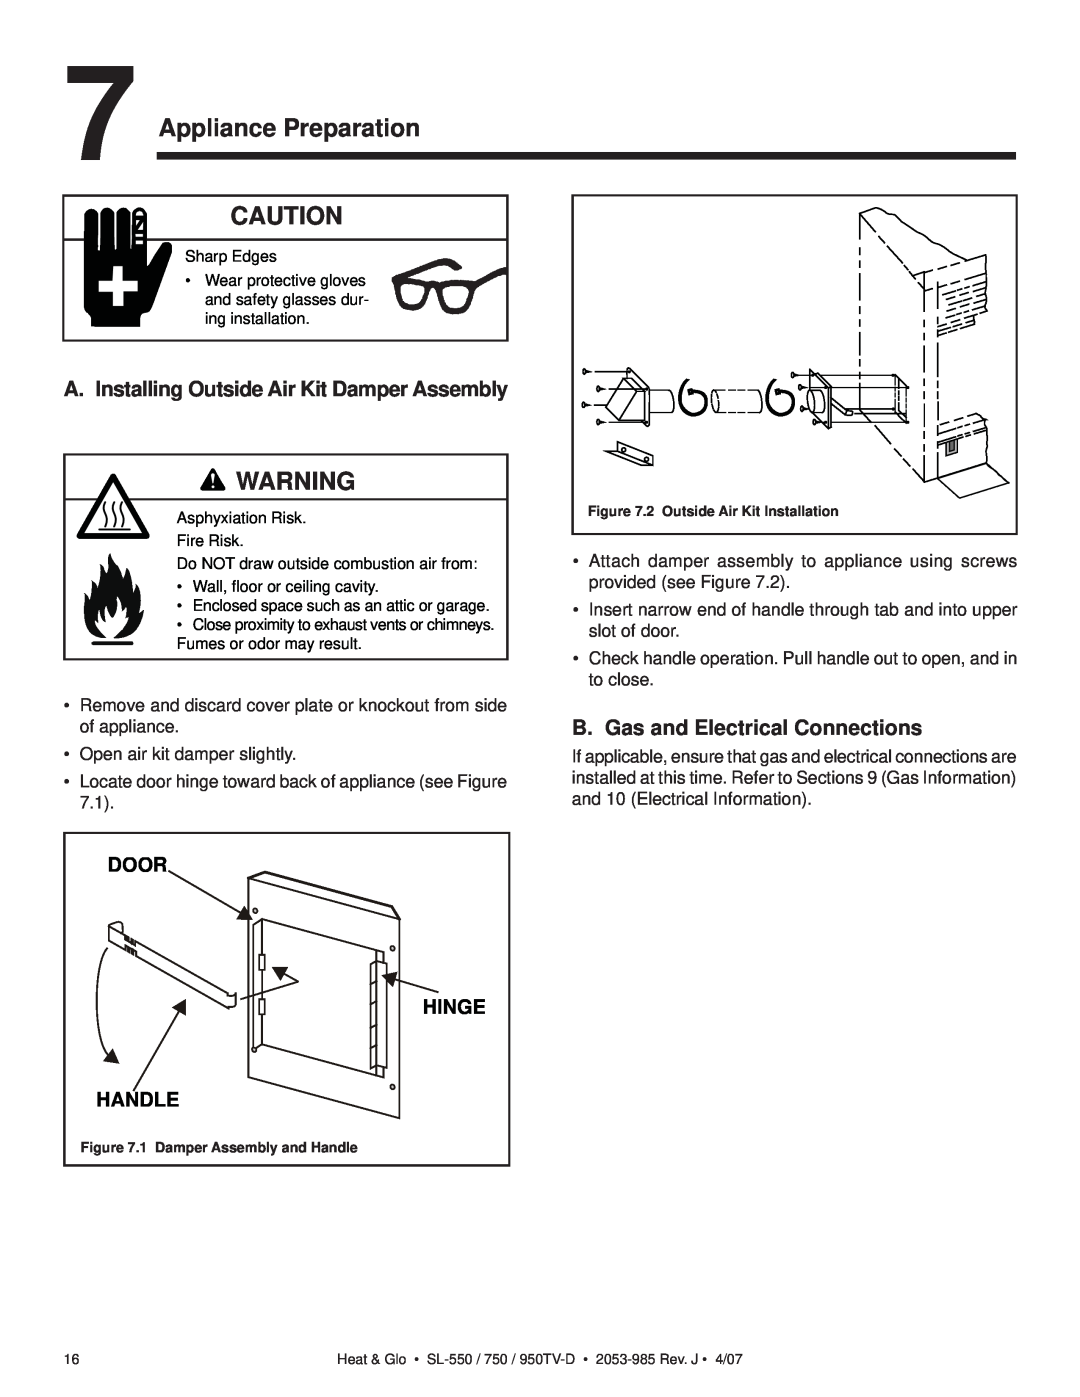 Heat & Glo LifeStyle SL-550TV-D Appliance Preparation, A. Installing Outside Air Kit Damper Assembly, Hinge, Handle, Door 